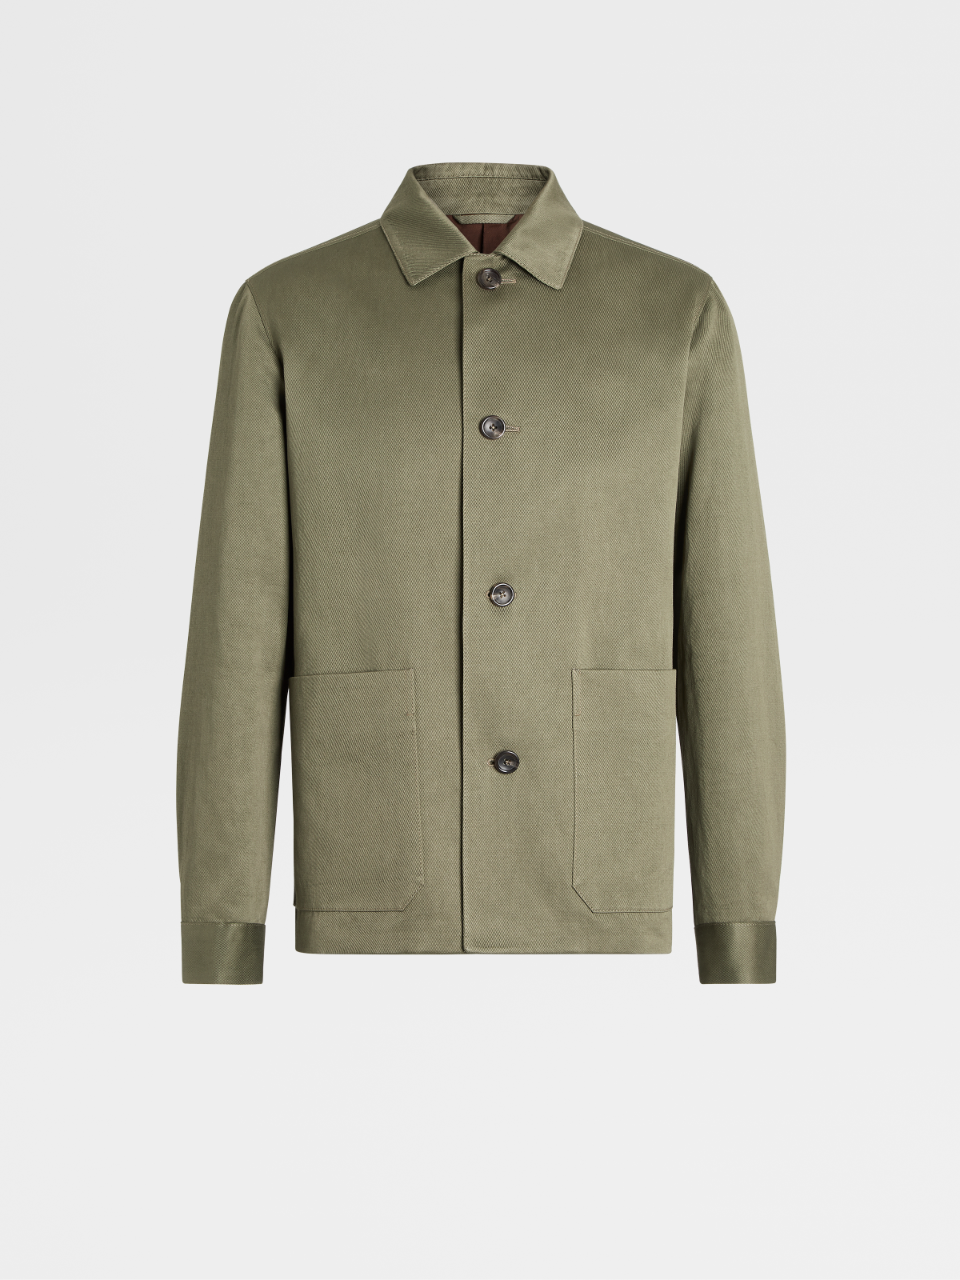 Light Military Green Cotton and Hemp Chore Jacket